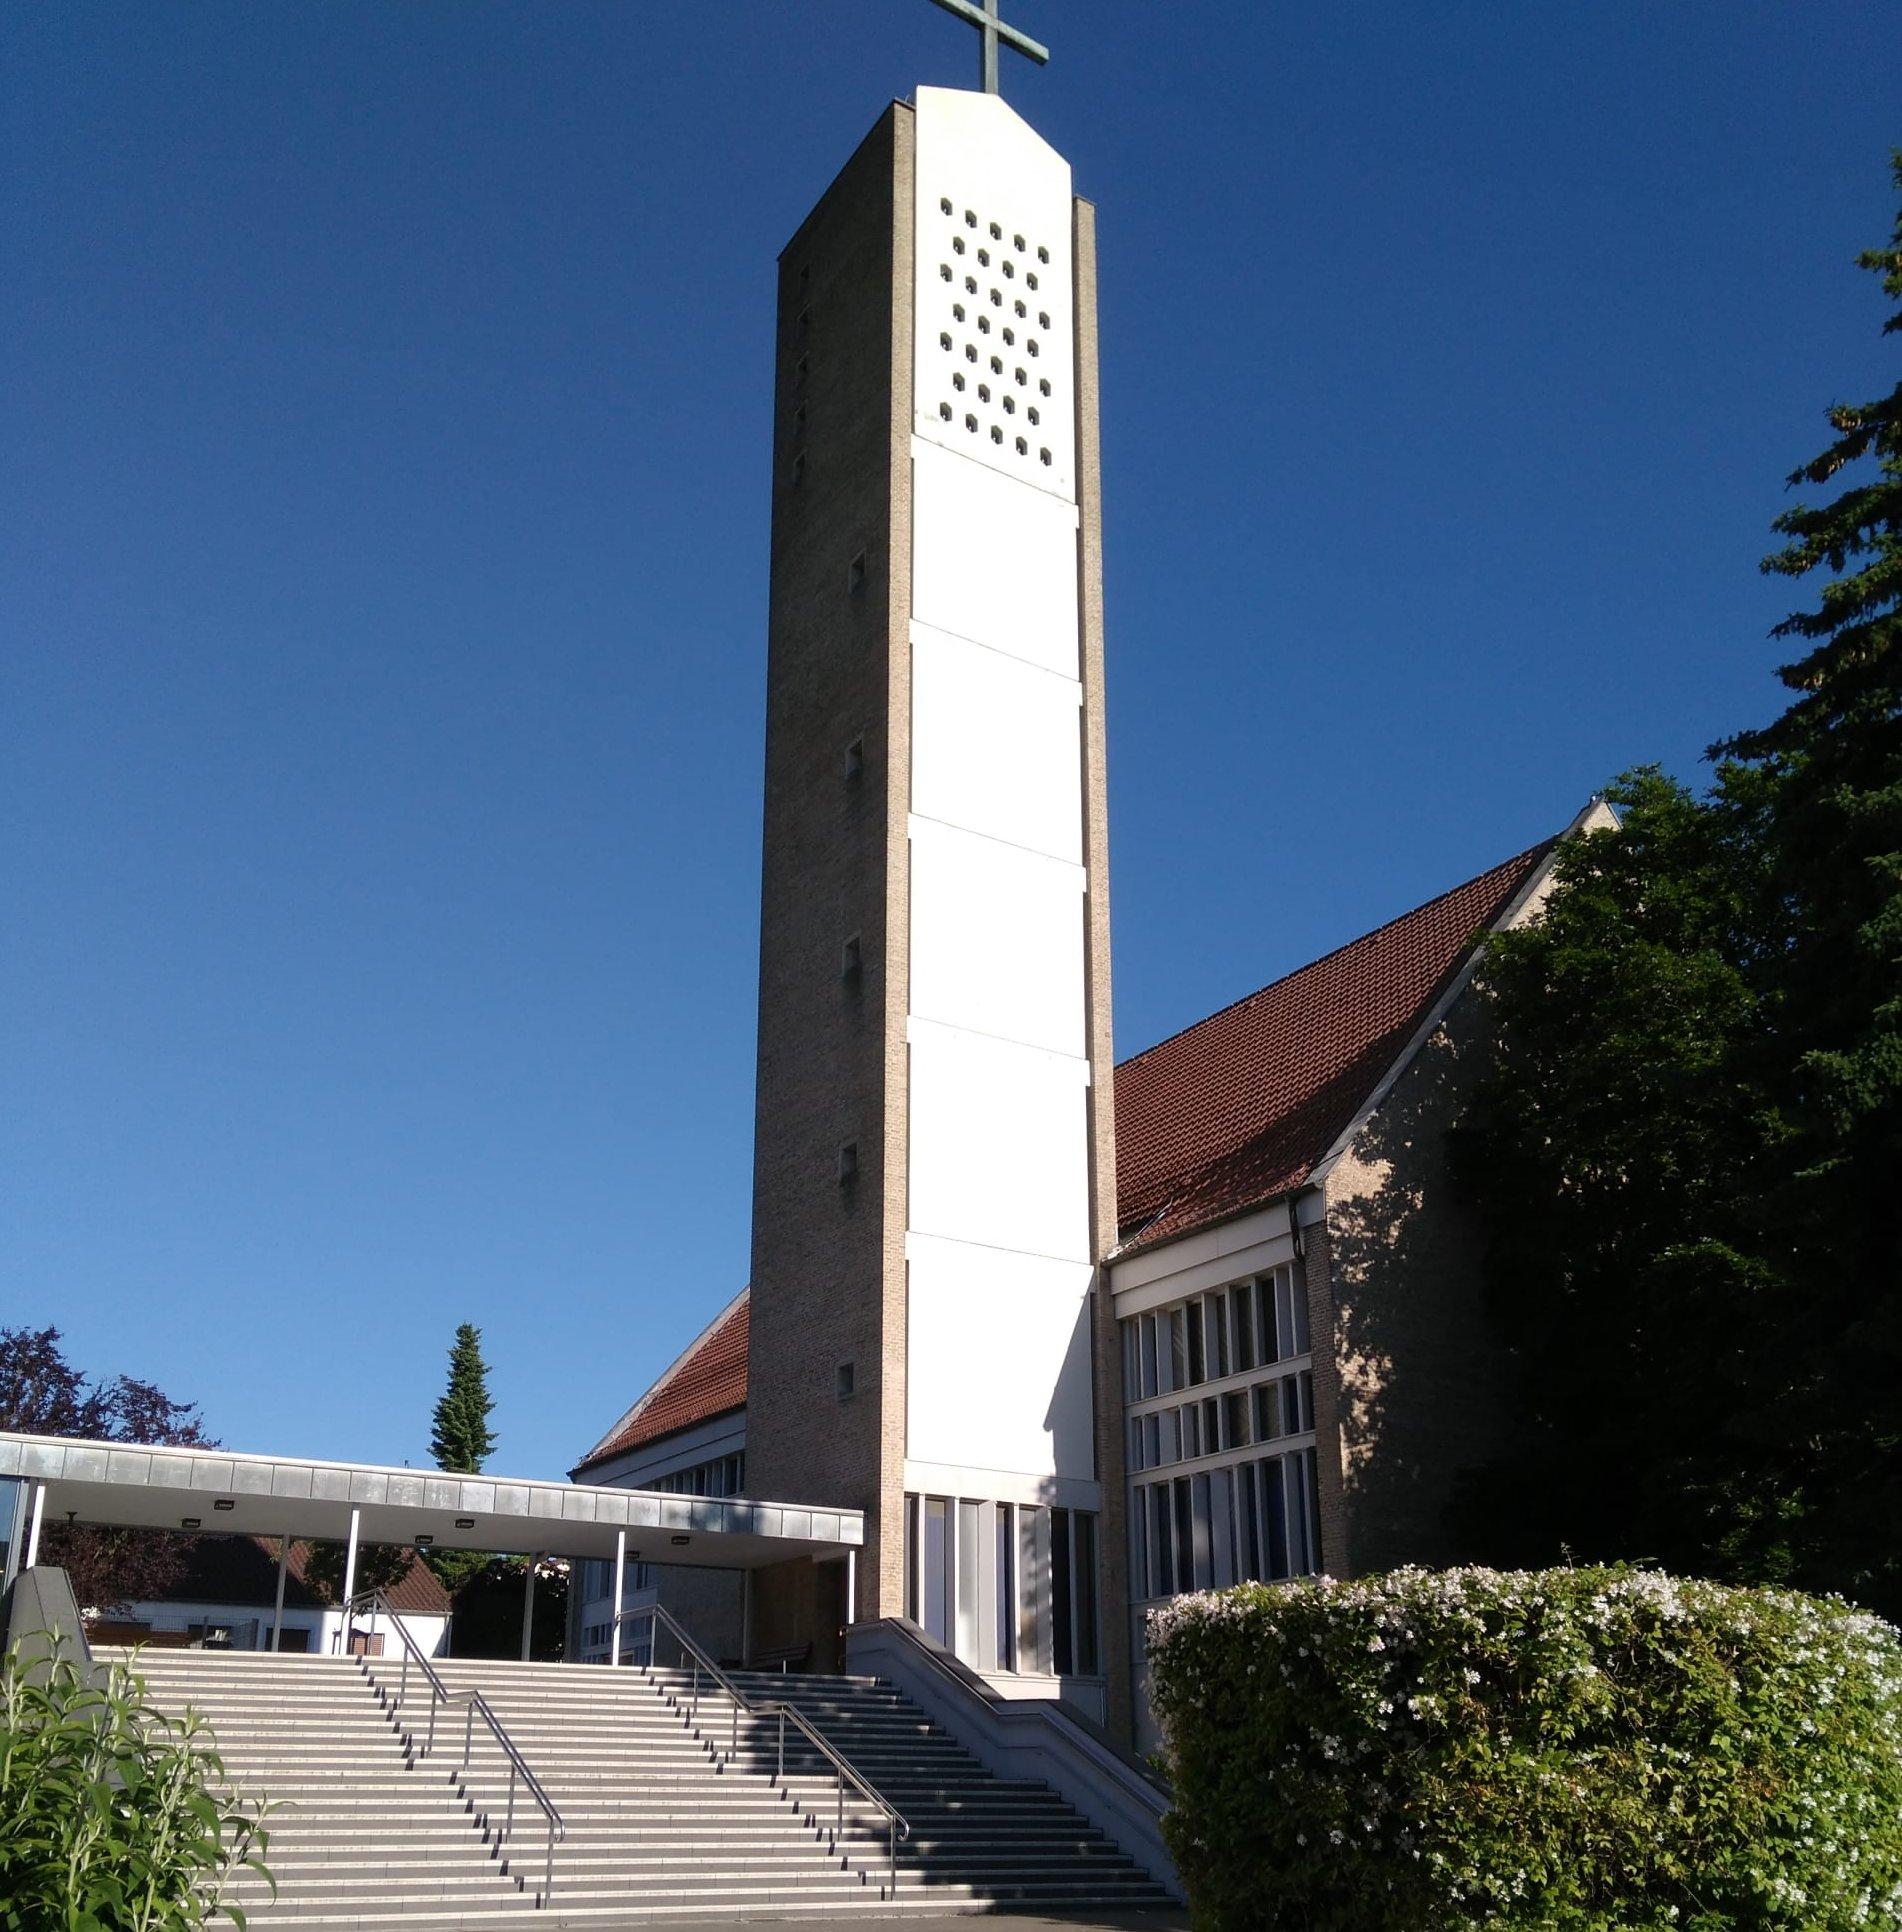 Treppenaufgang und moderner Kirchturm